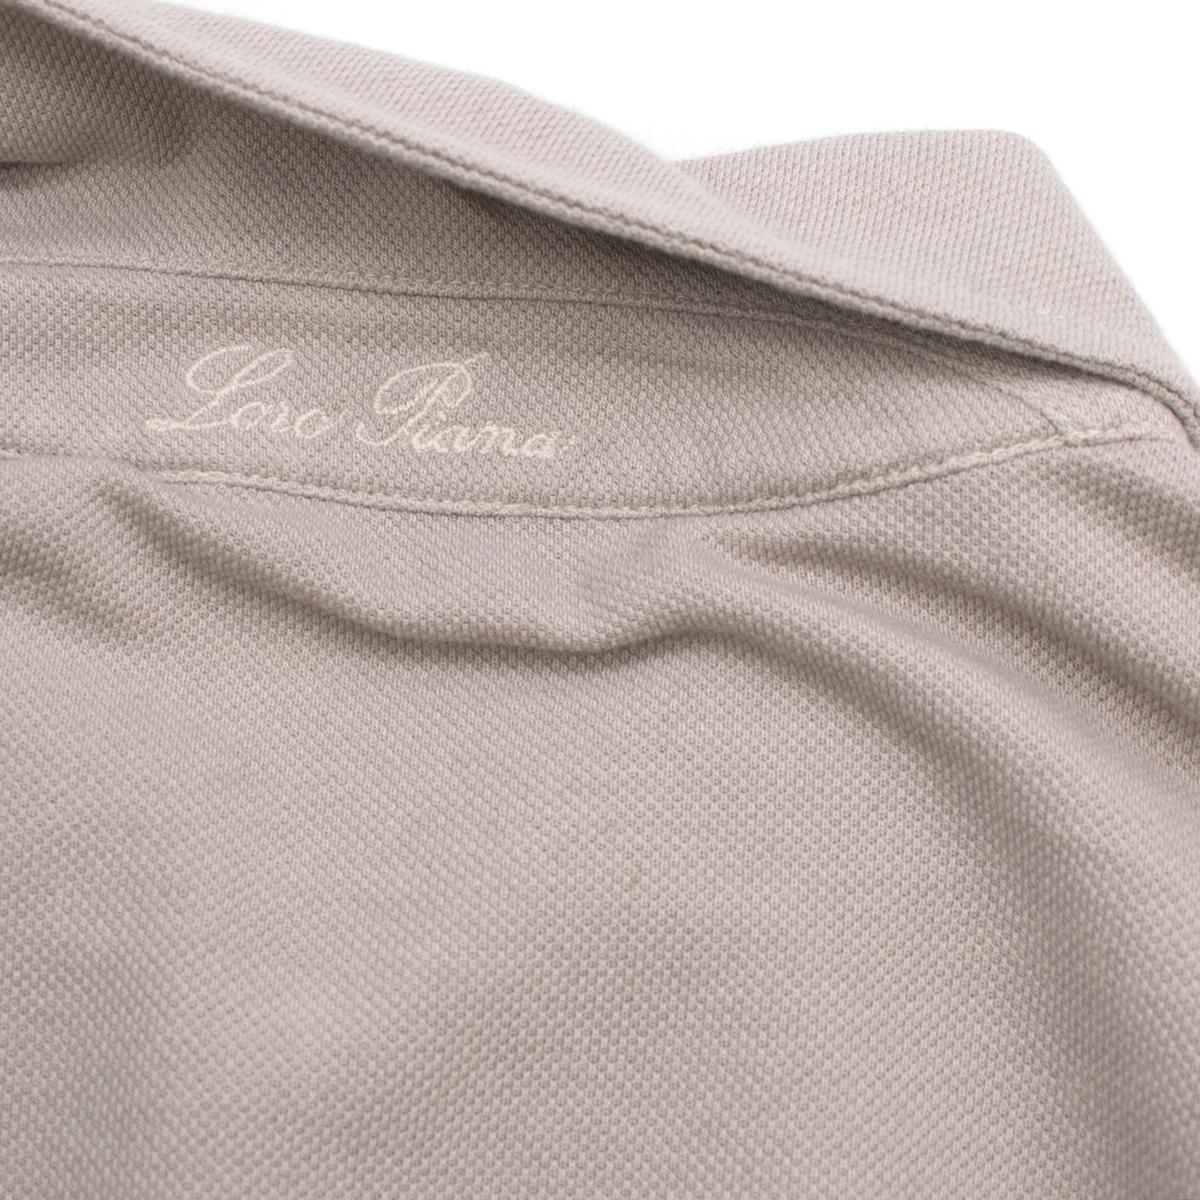 Loro Piana Men's Light Taupe Cotton & Cashmere Polo Shirt XL 6